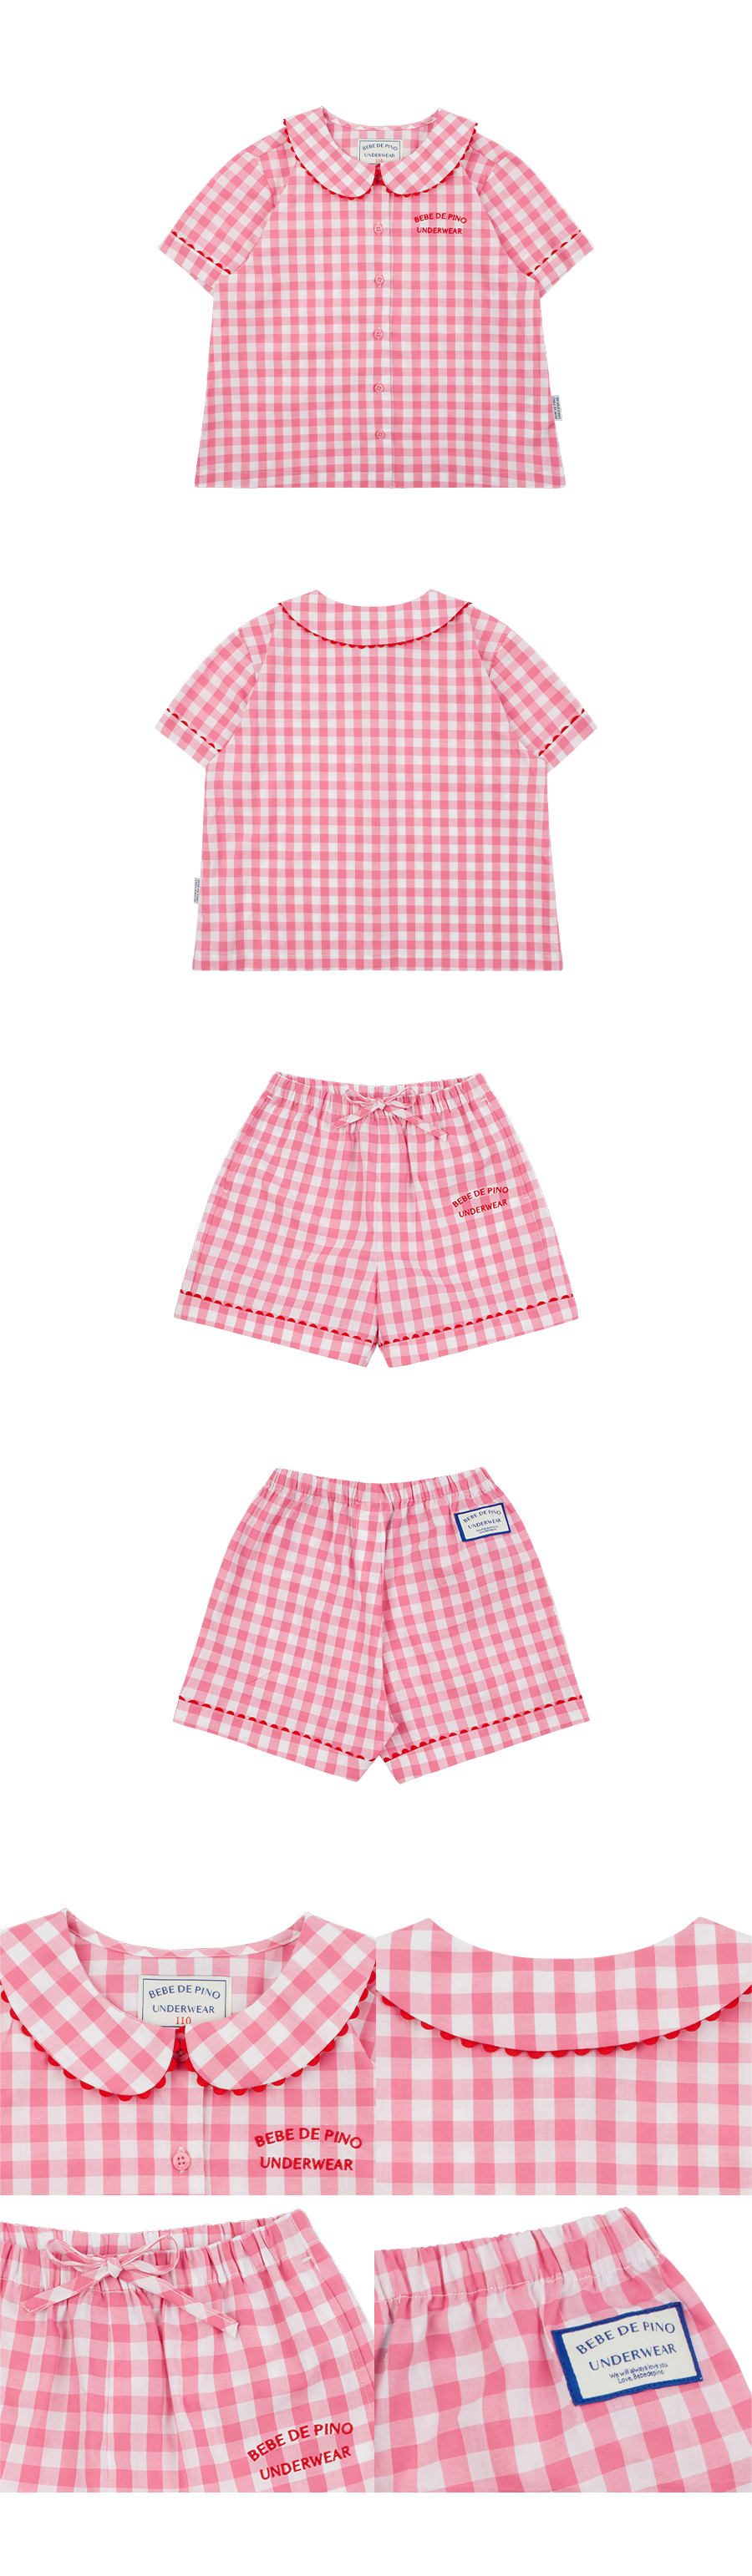 Paris pink check girl pajamas set Details